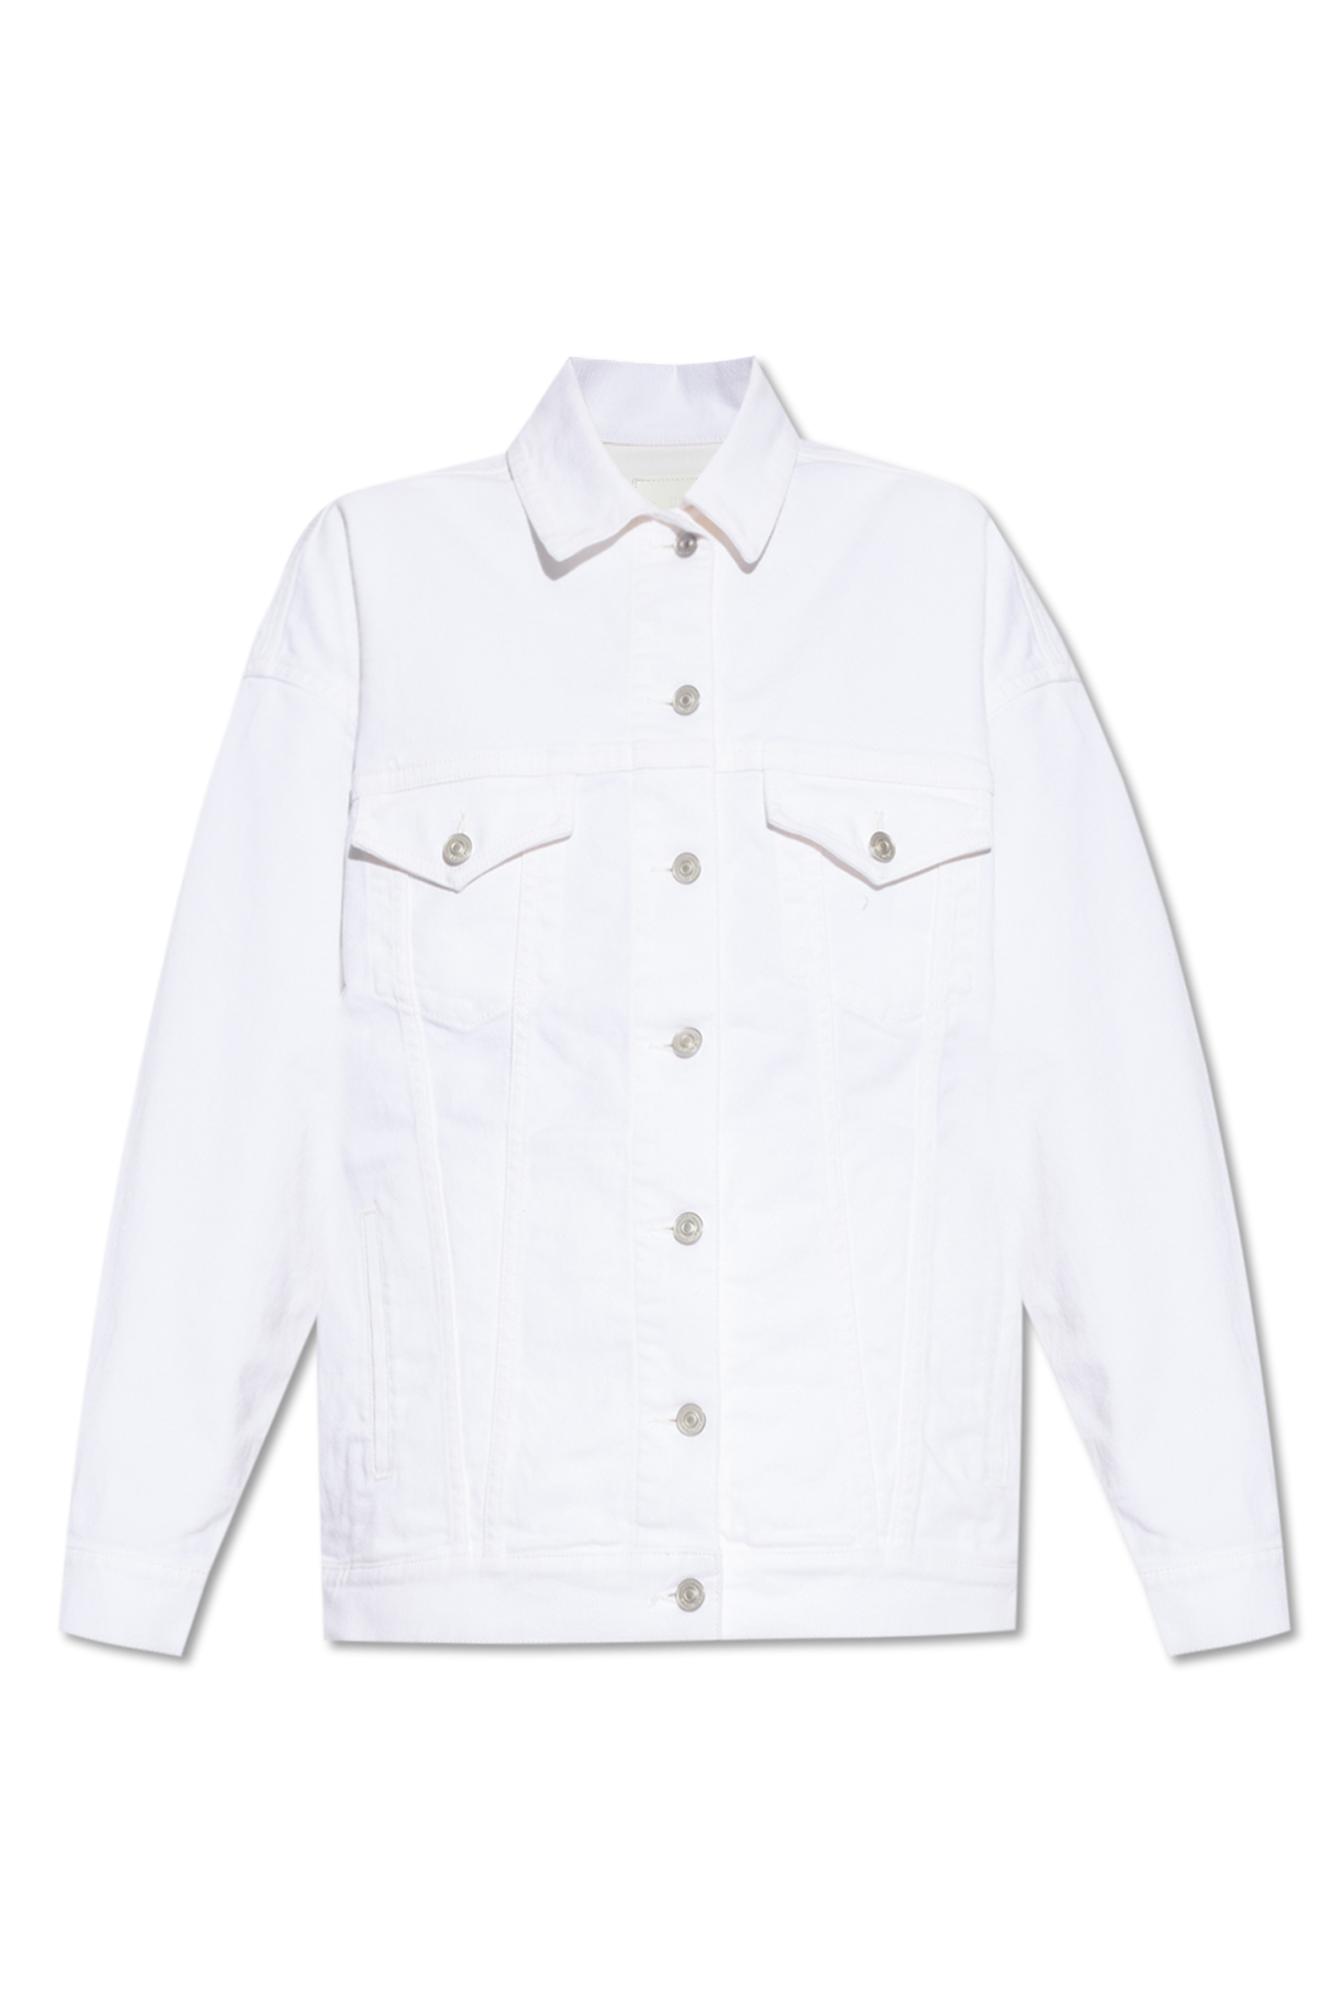 Givenchy Oversize Denim Jacket in White | Lyst